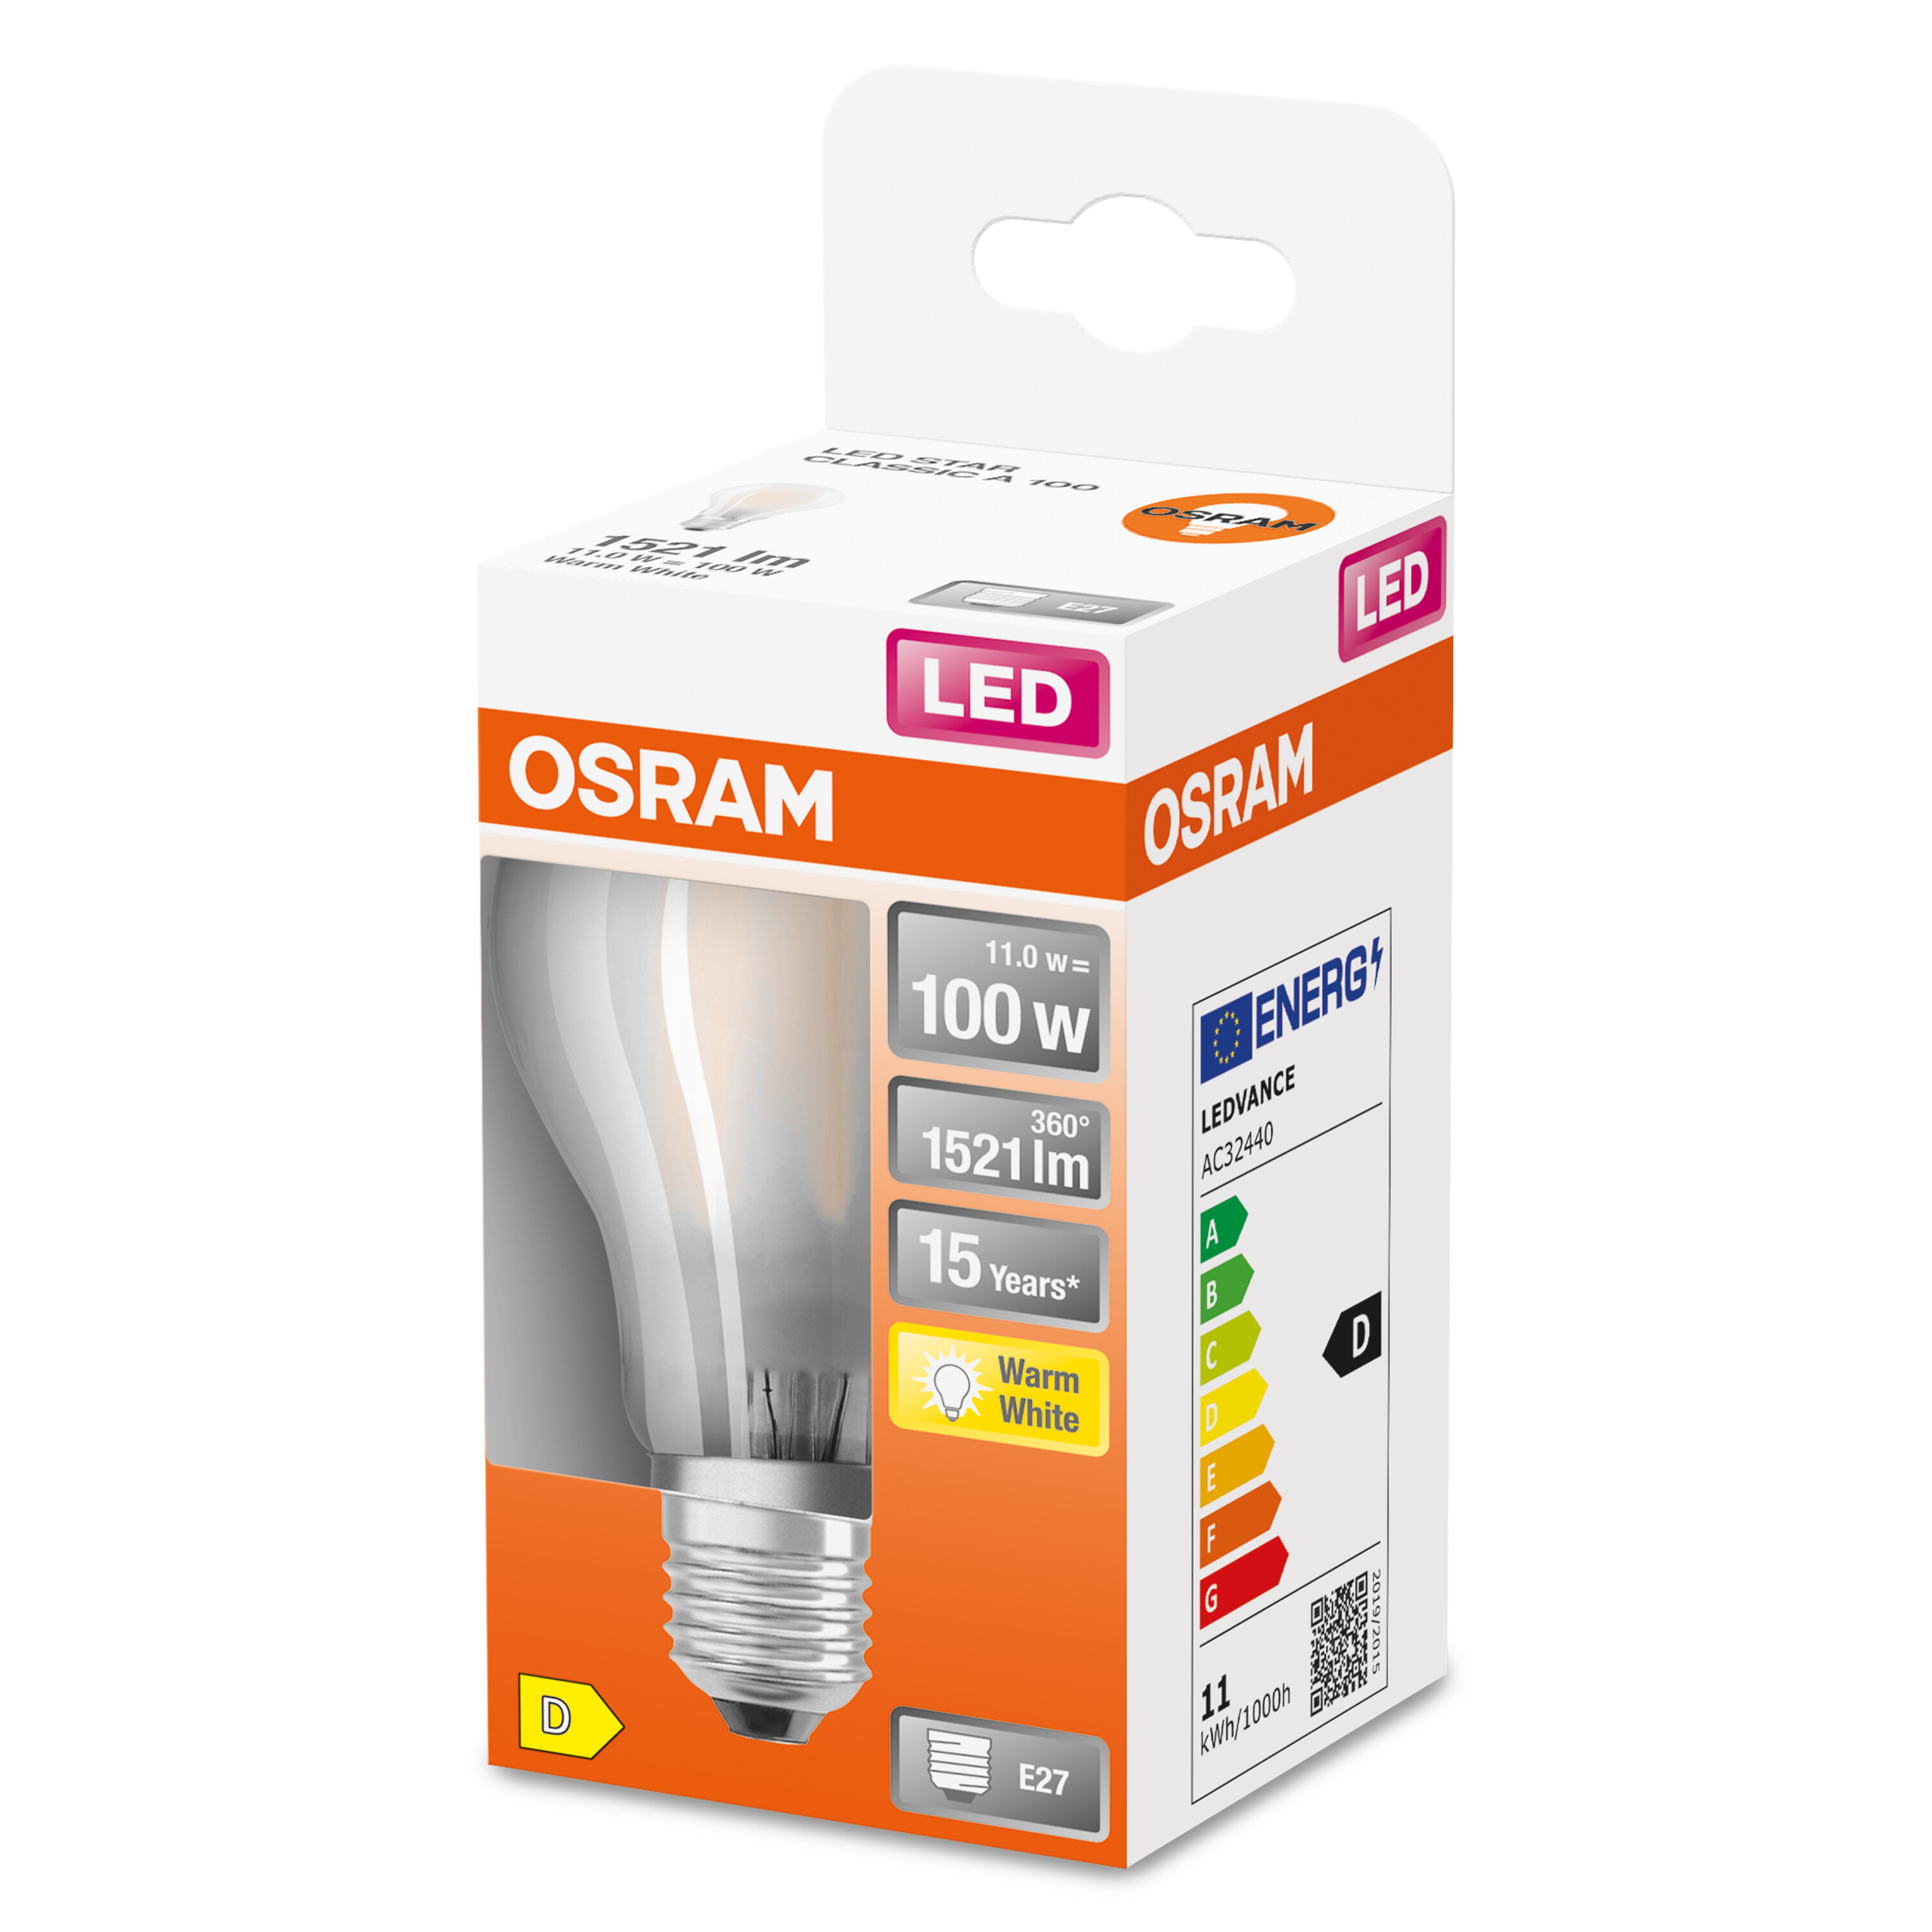 OSRAM  1521 Lampe Lumen A LED LED Warmweiß Retrofit CLASSIC